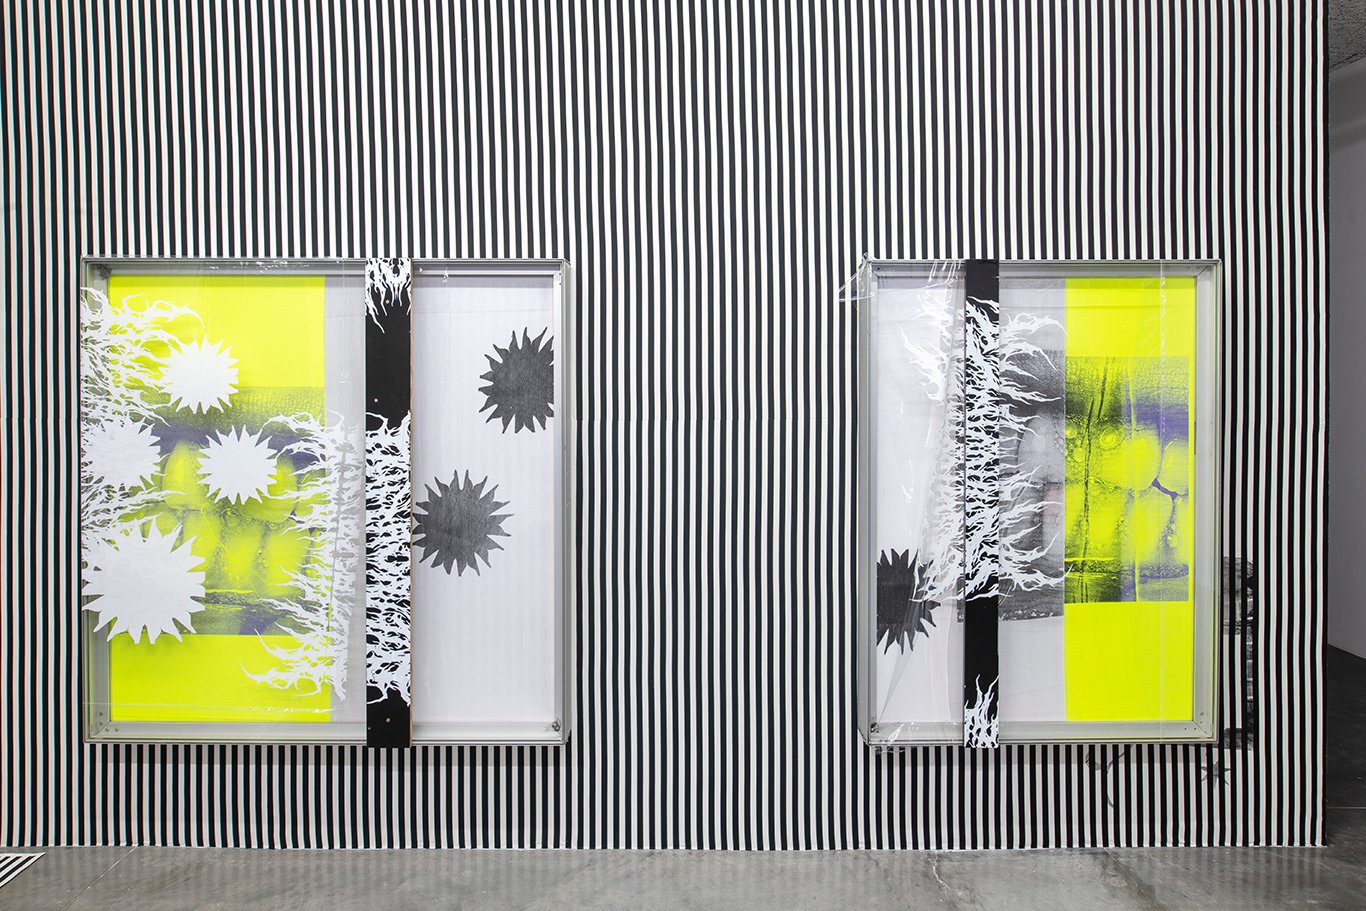 Installation view, David Douard, O’ Ti’ Lulaby, frac île-de-france, le plateau, Paris, 2020